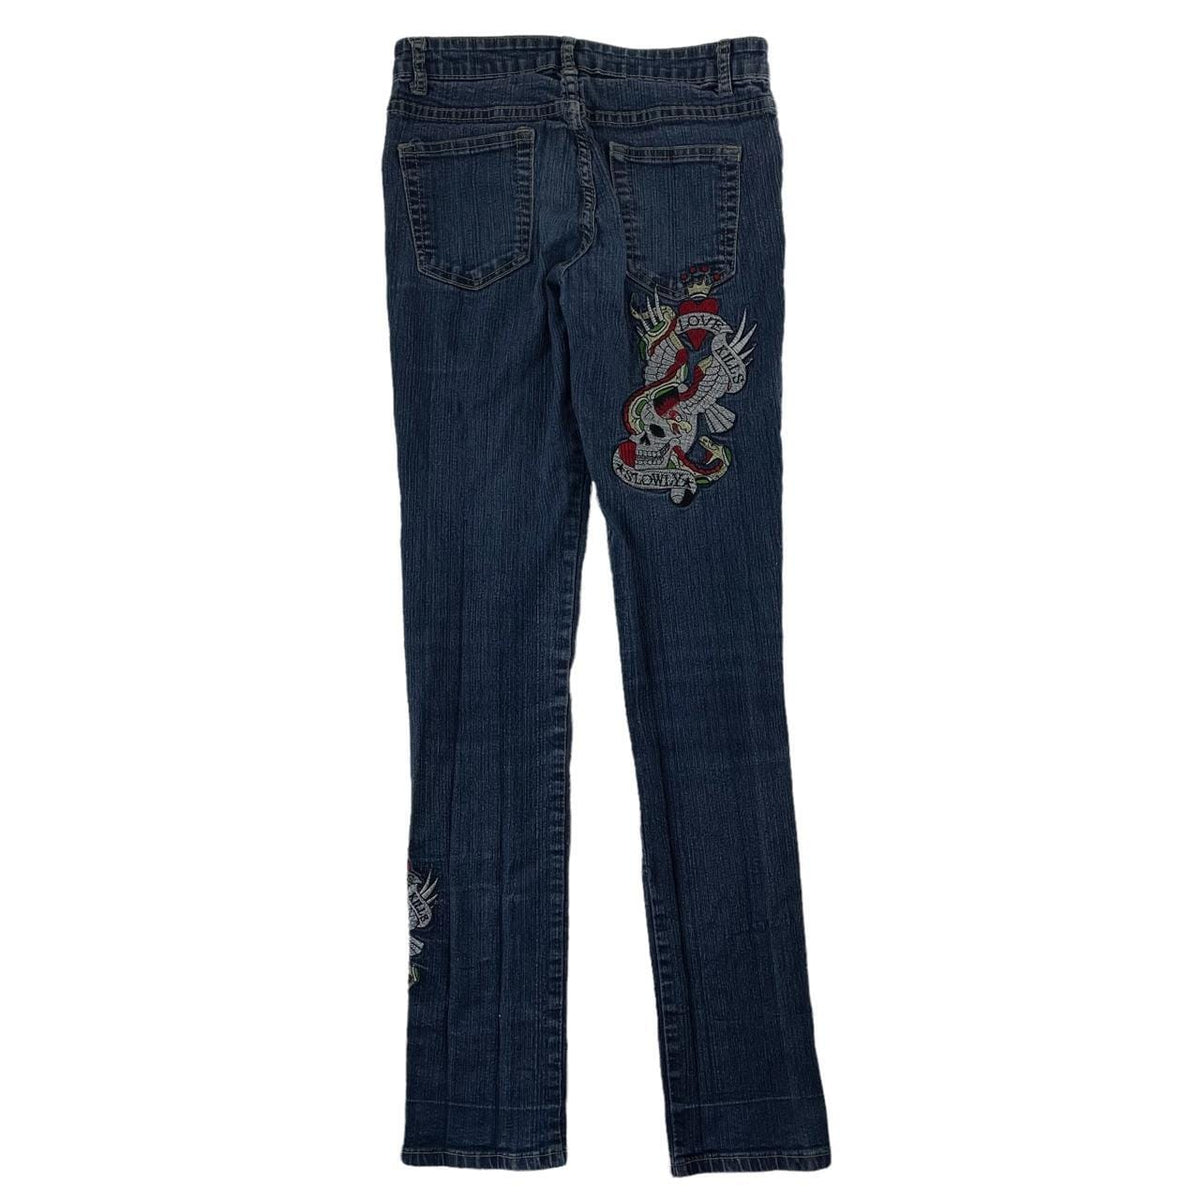 Vintage Skull denim jeans trousers W26